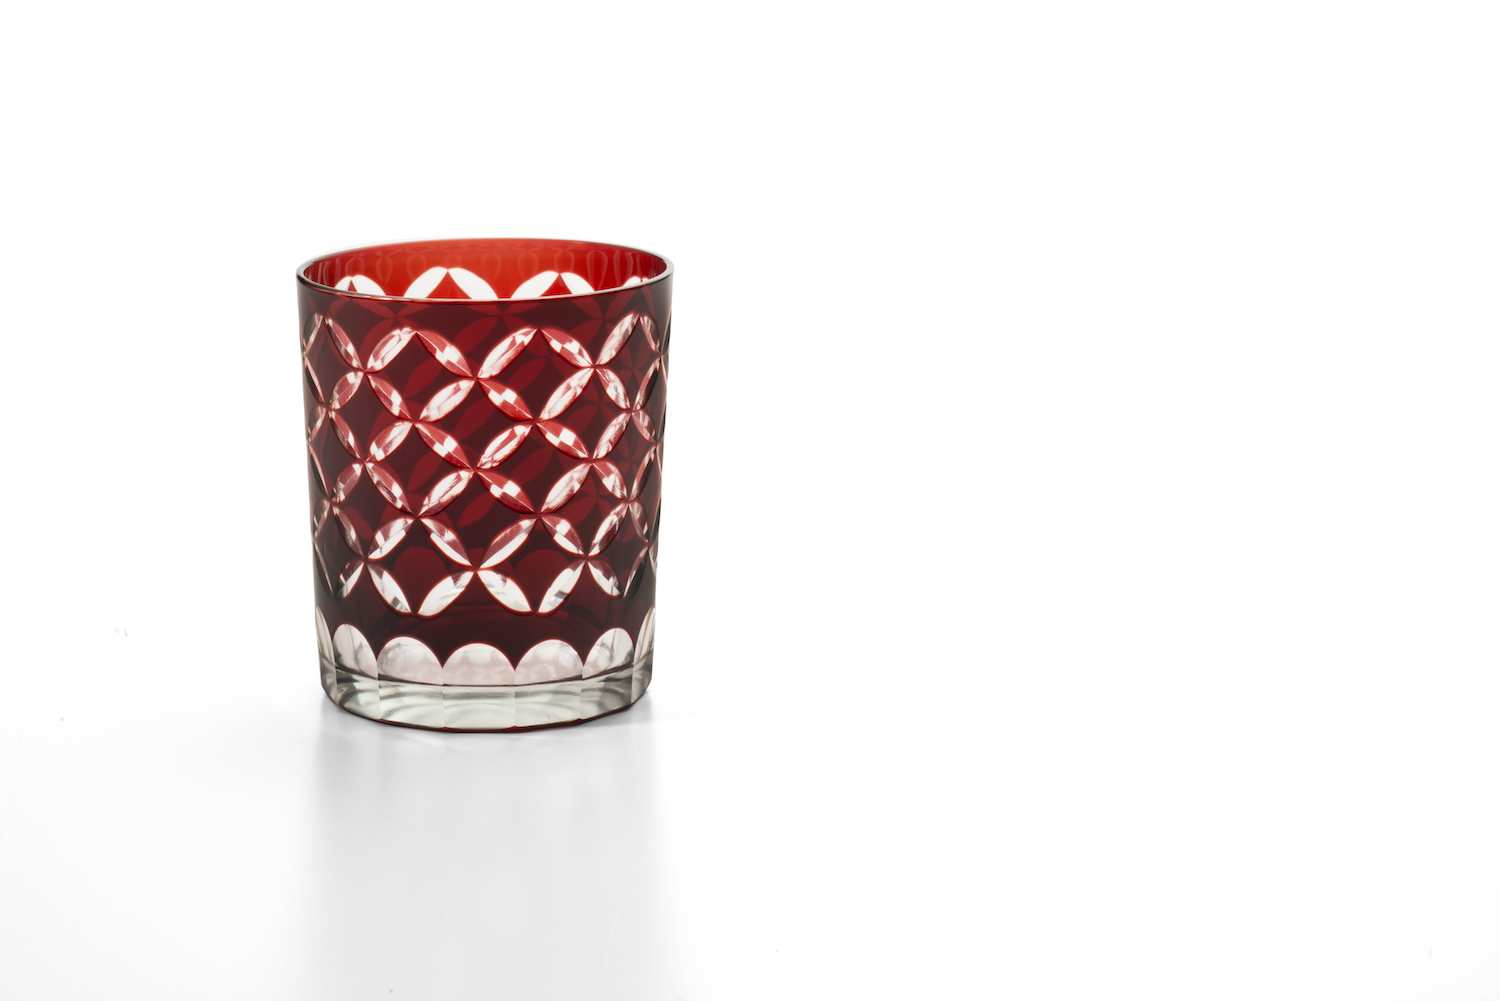 Red Edo Kiriko glass, a traditional Japanese craft